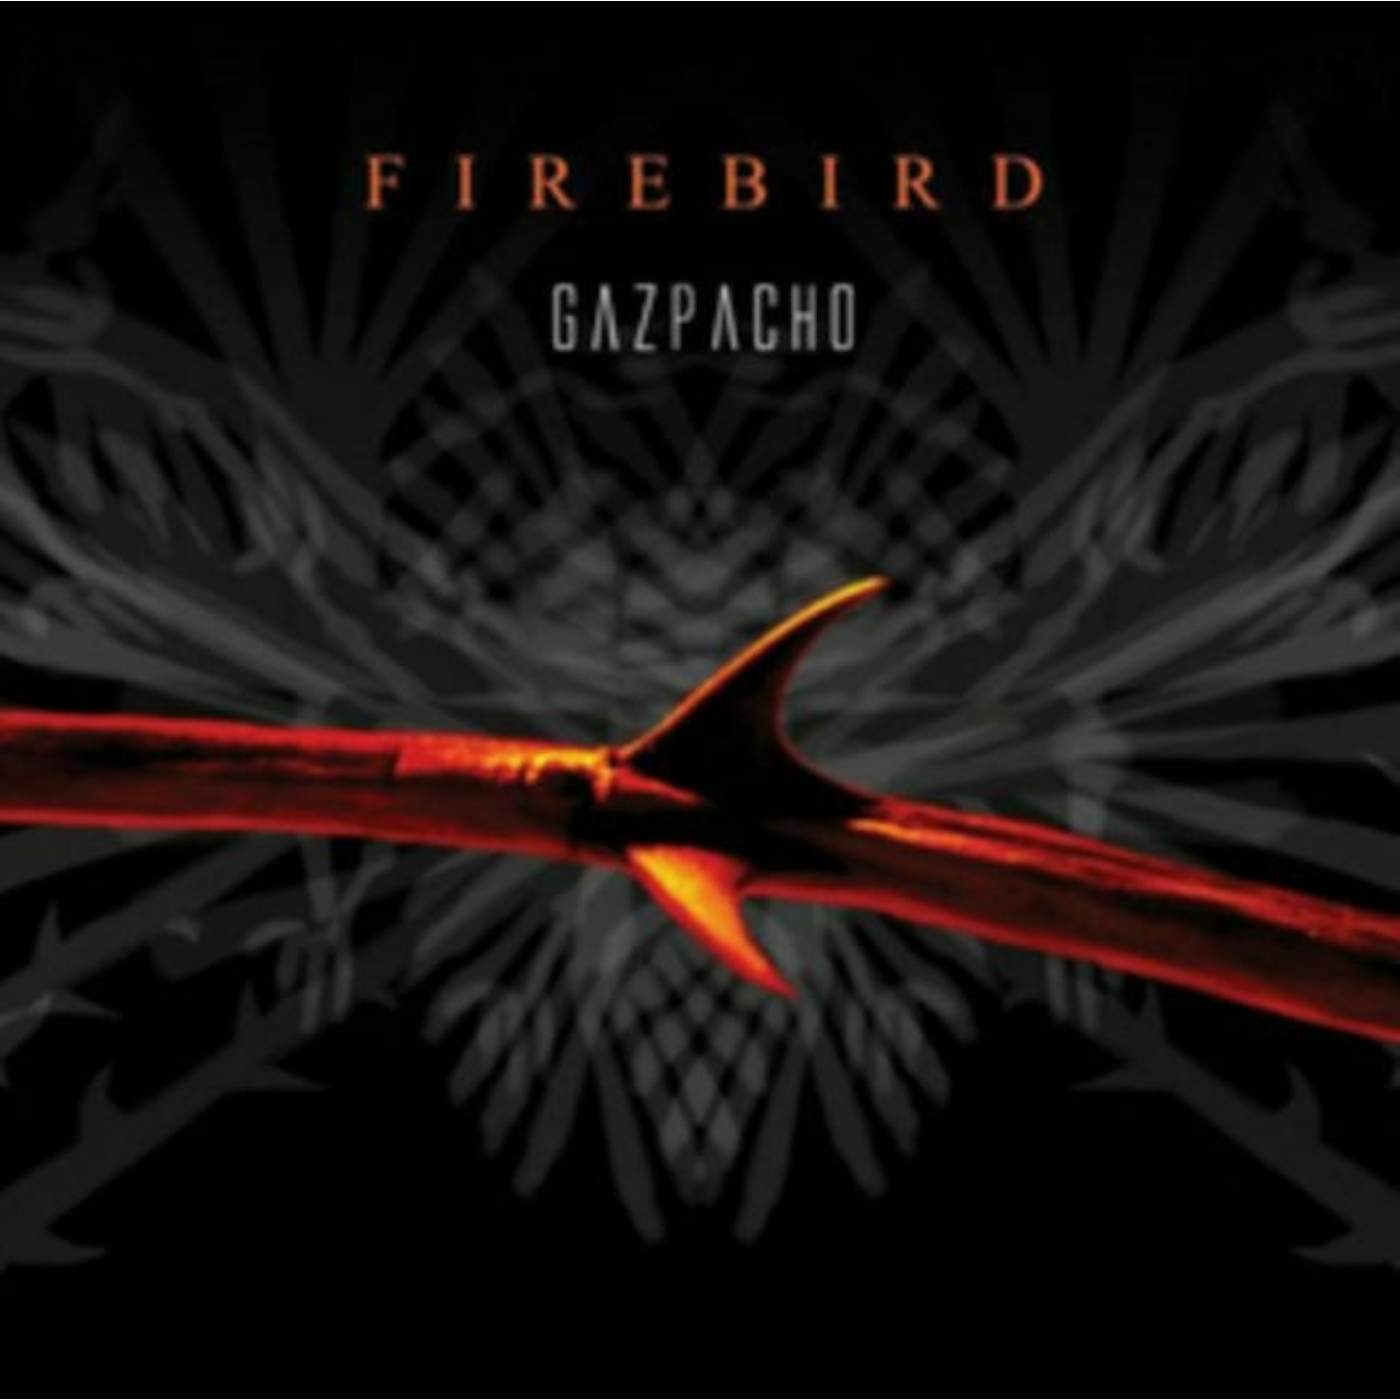 Gazpacho CD - Firebird